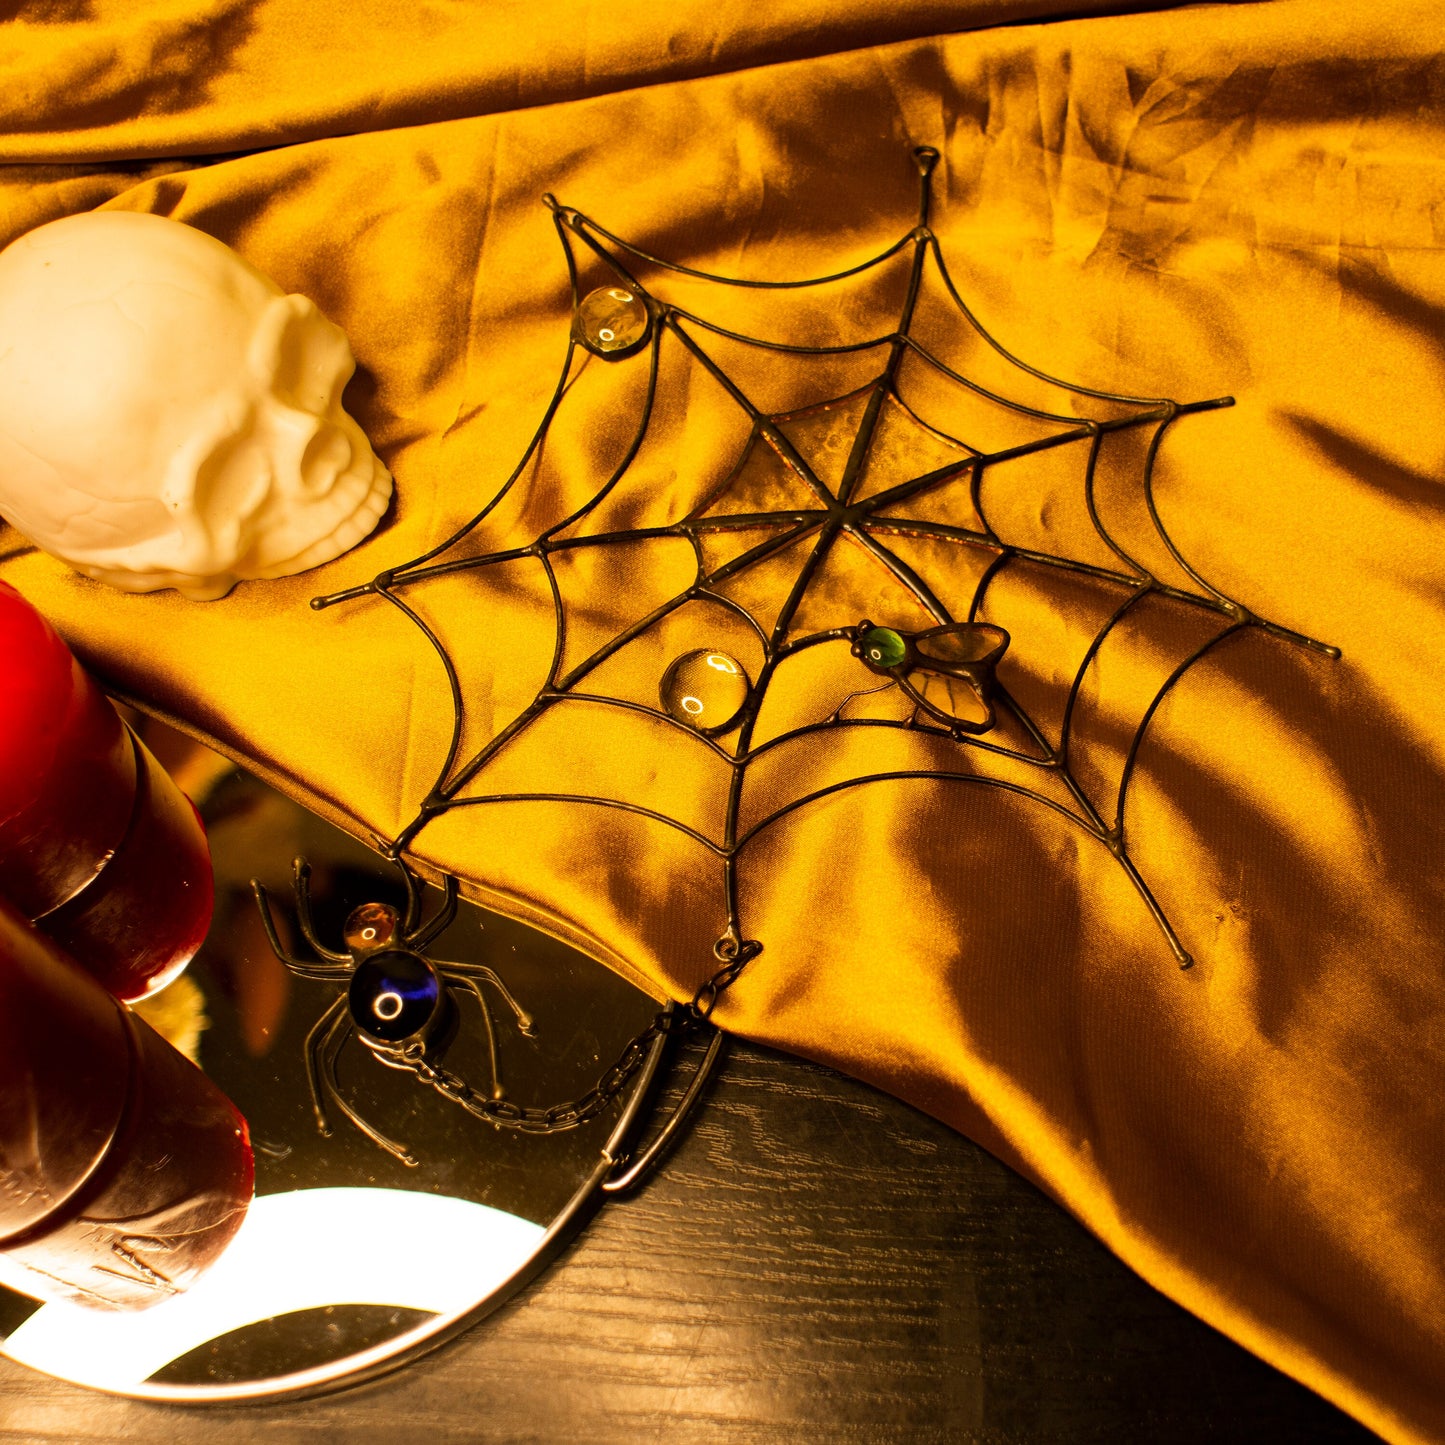 Spider net halloween spooky home decoration